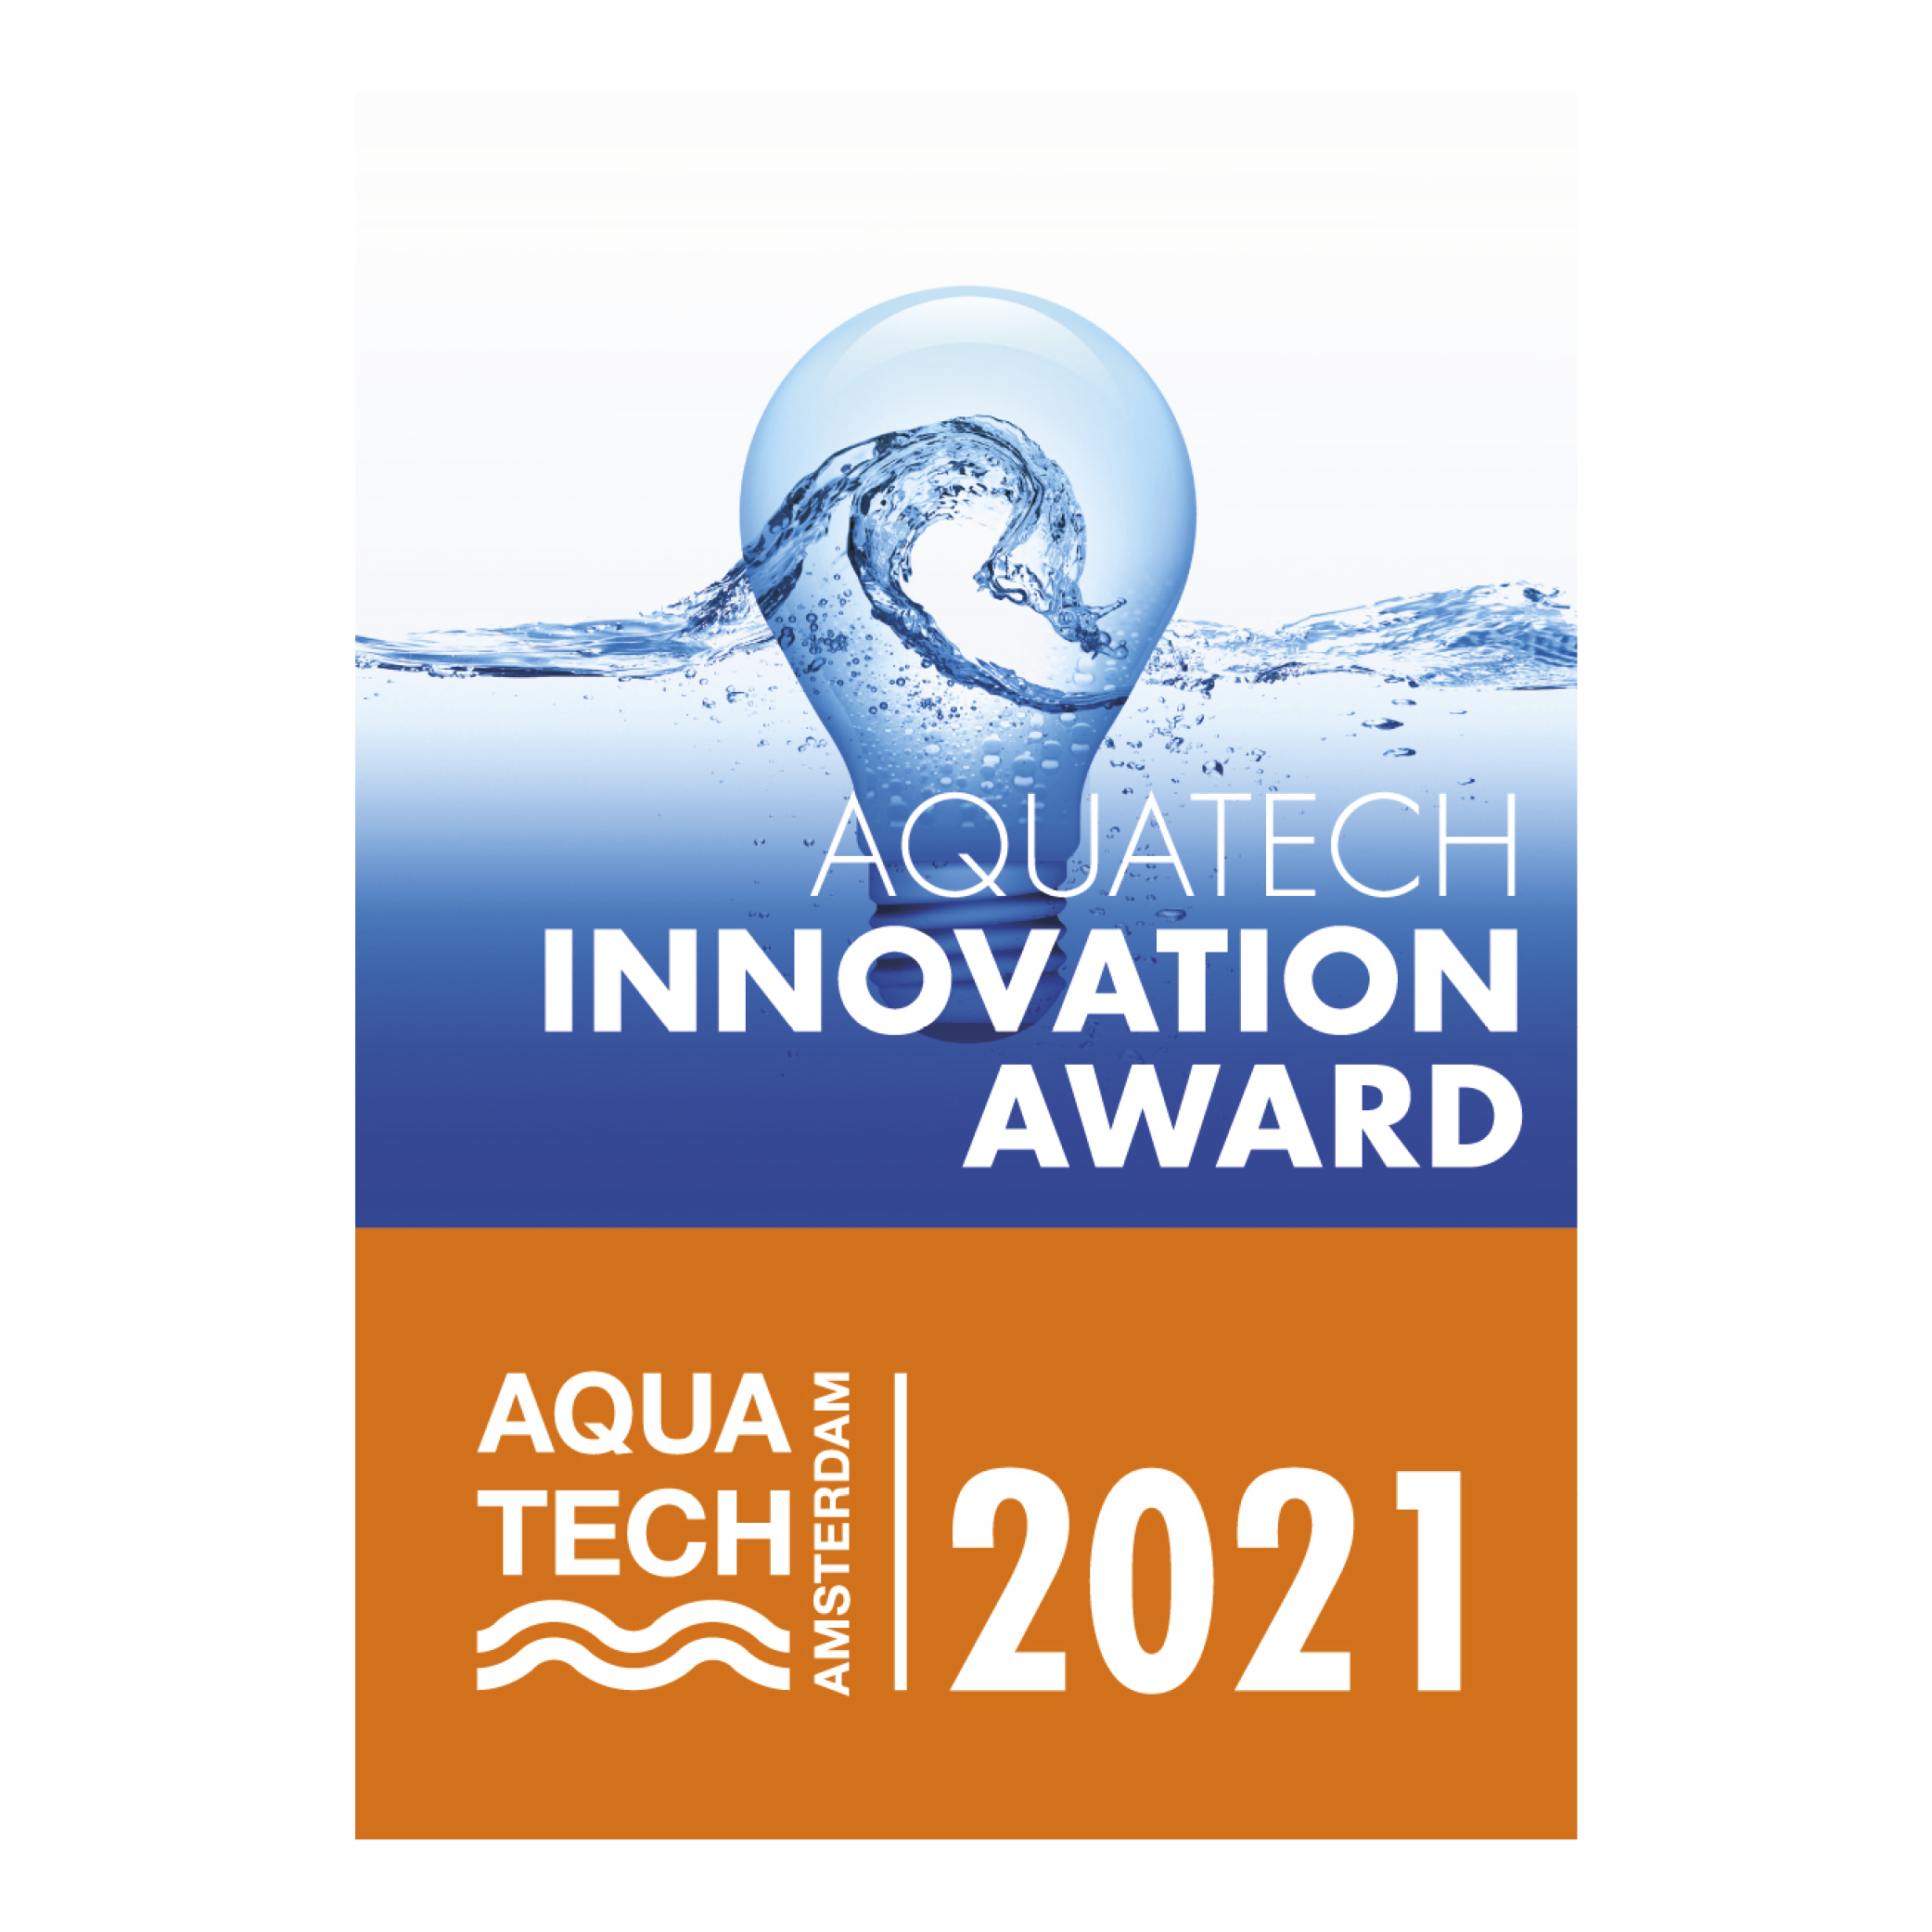 Aquatech Innovation Award 2021